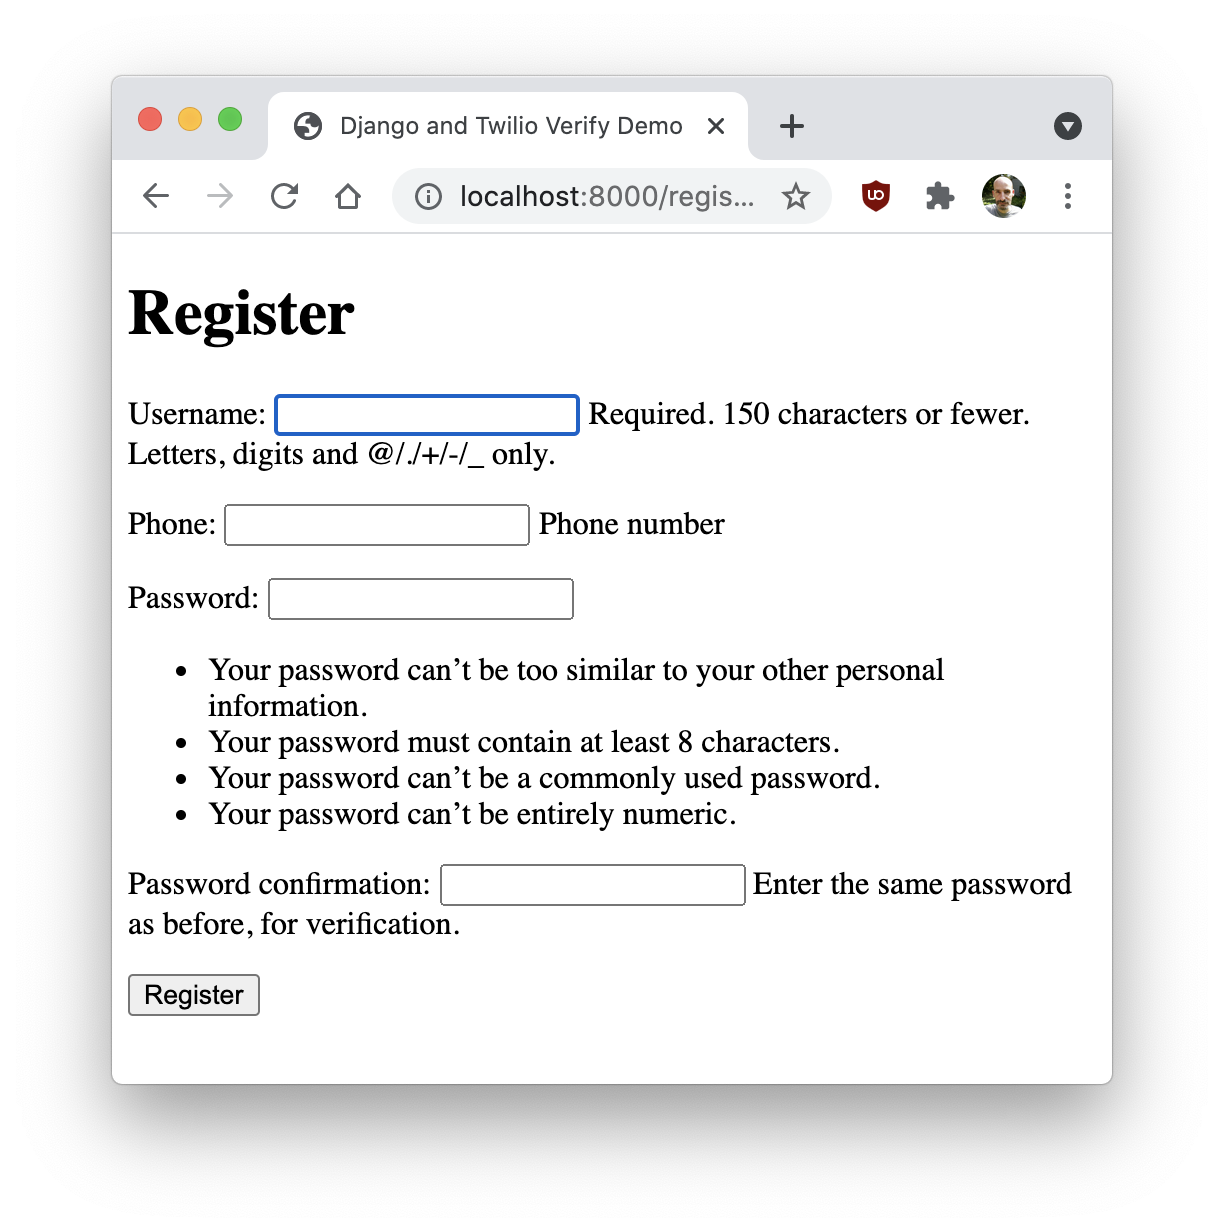 Customized registration form